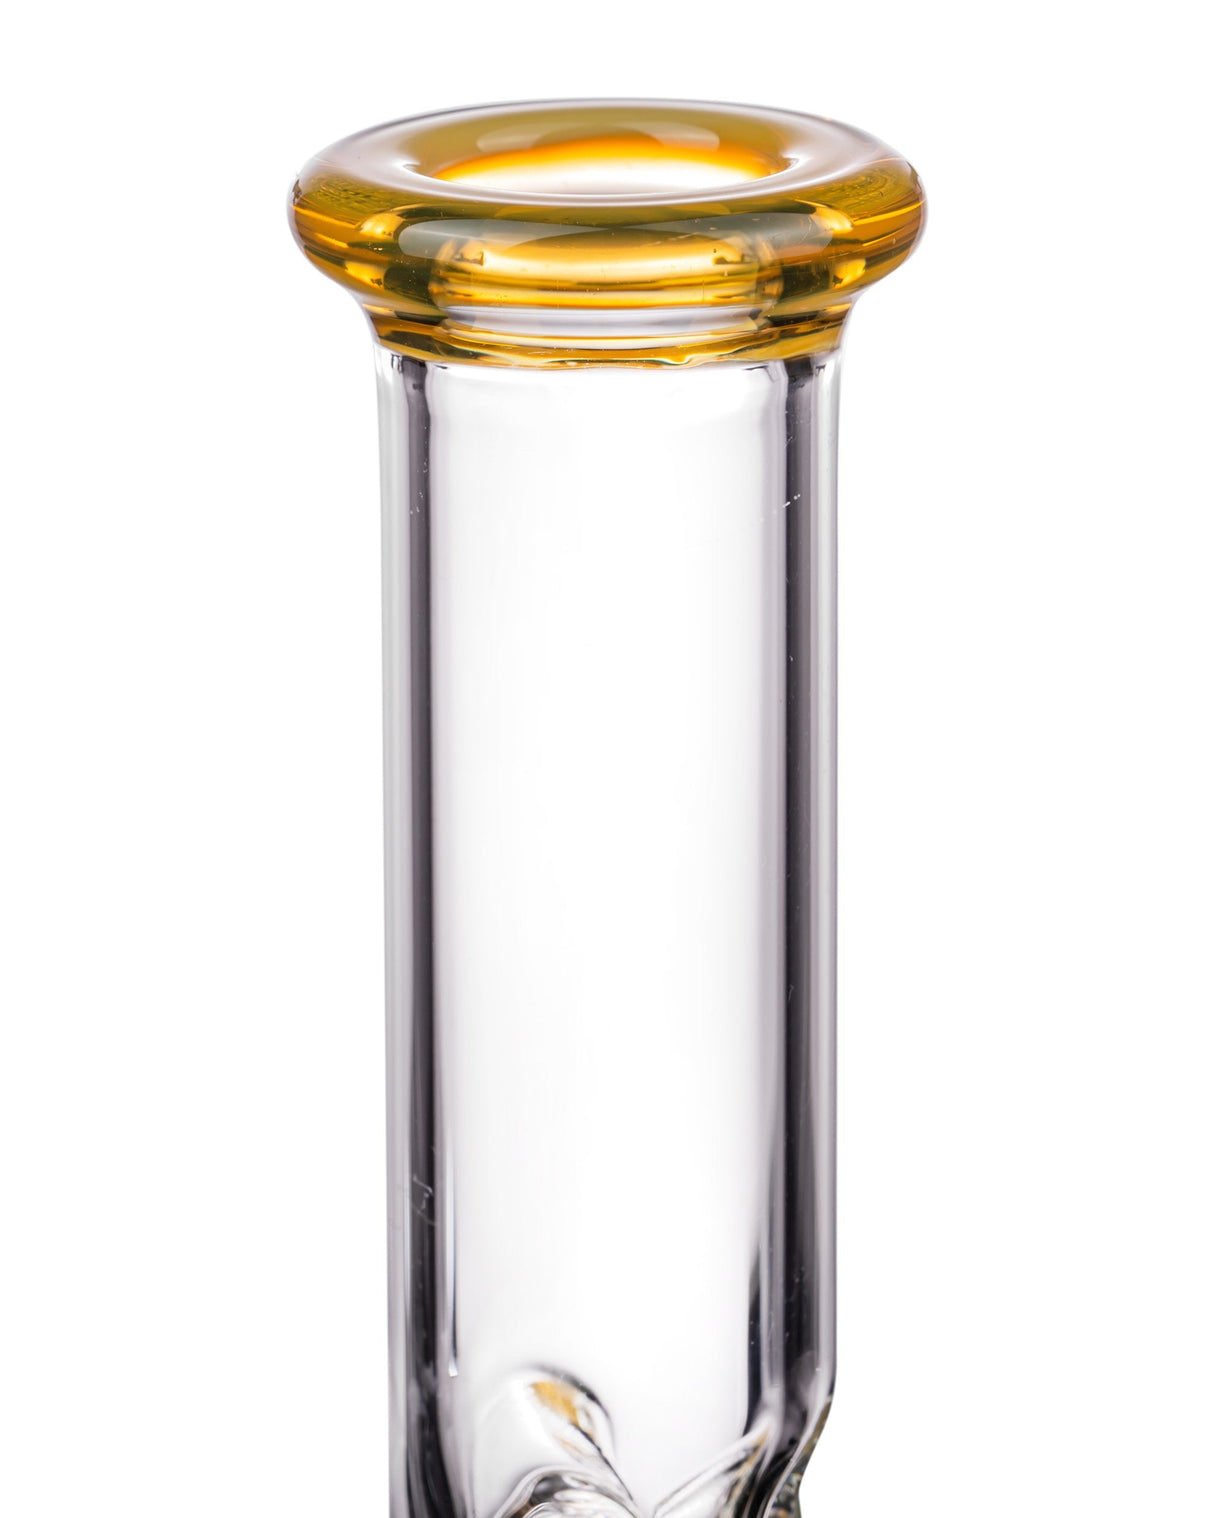 Diamond Glass Skinny Neck UFO Beaker with Yellow Accents - Close-Up